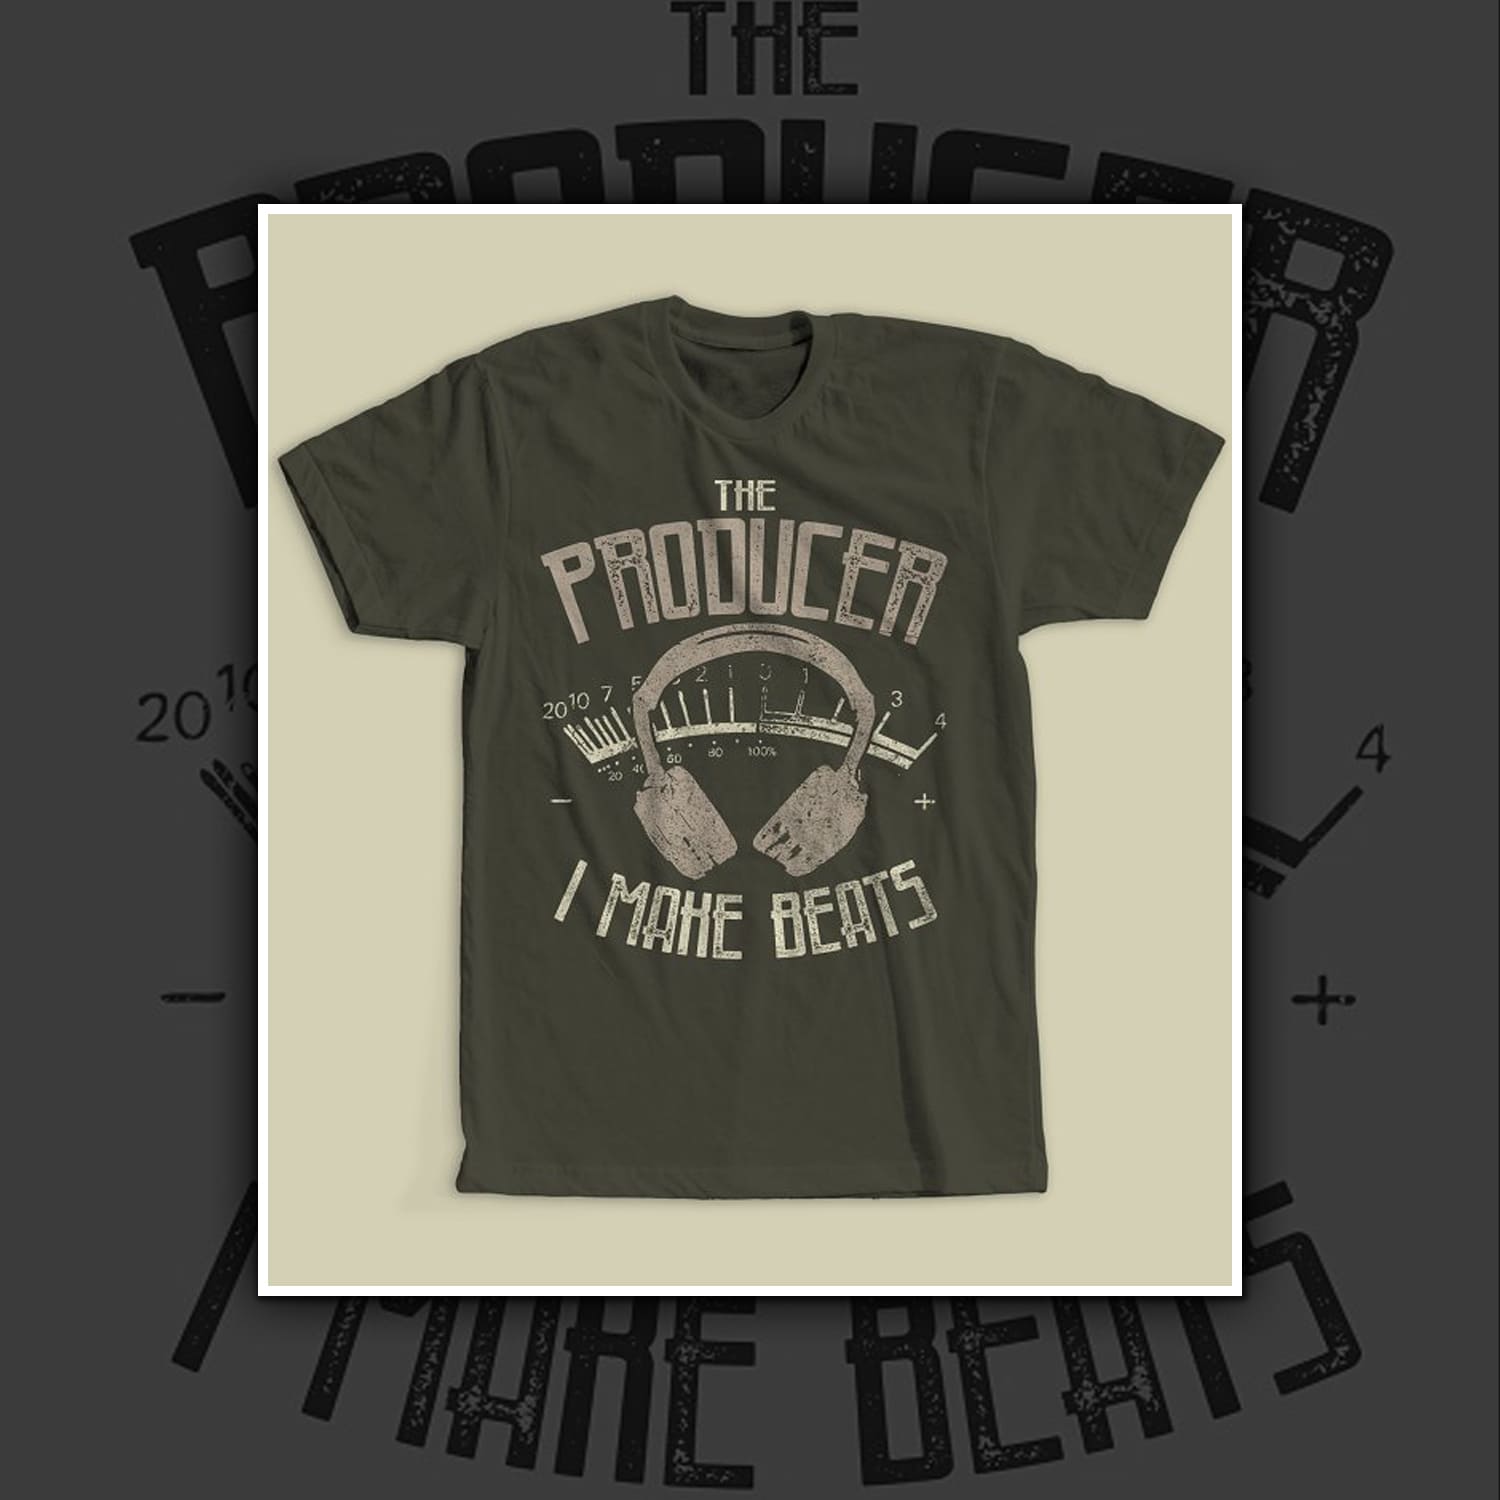 Music Producer T-Shirt Design.